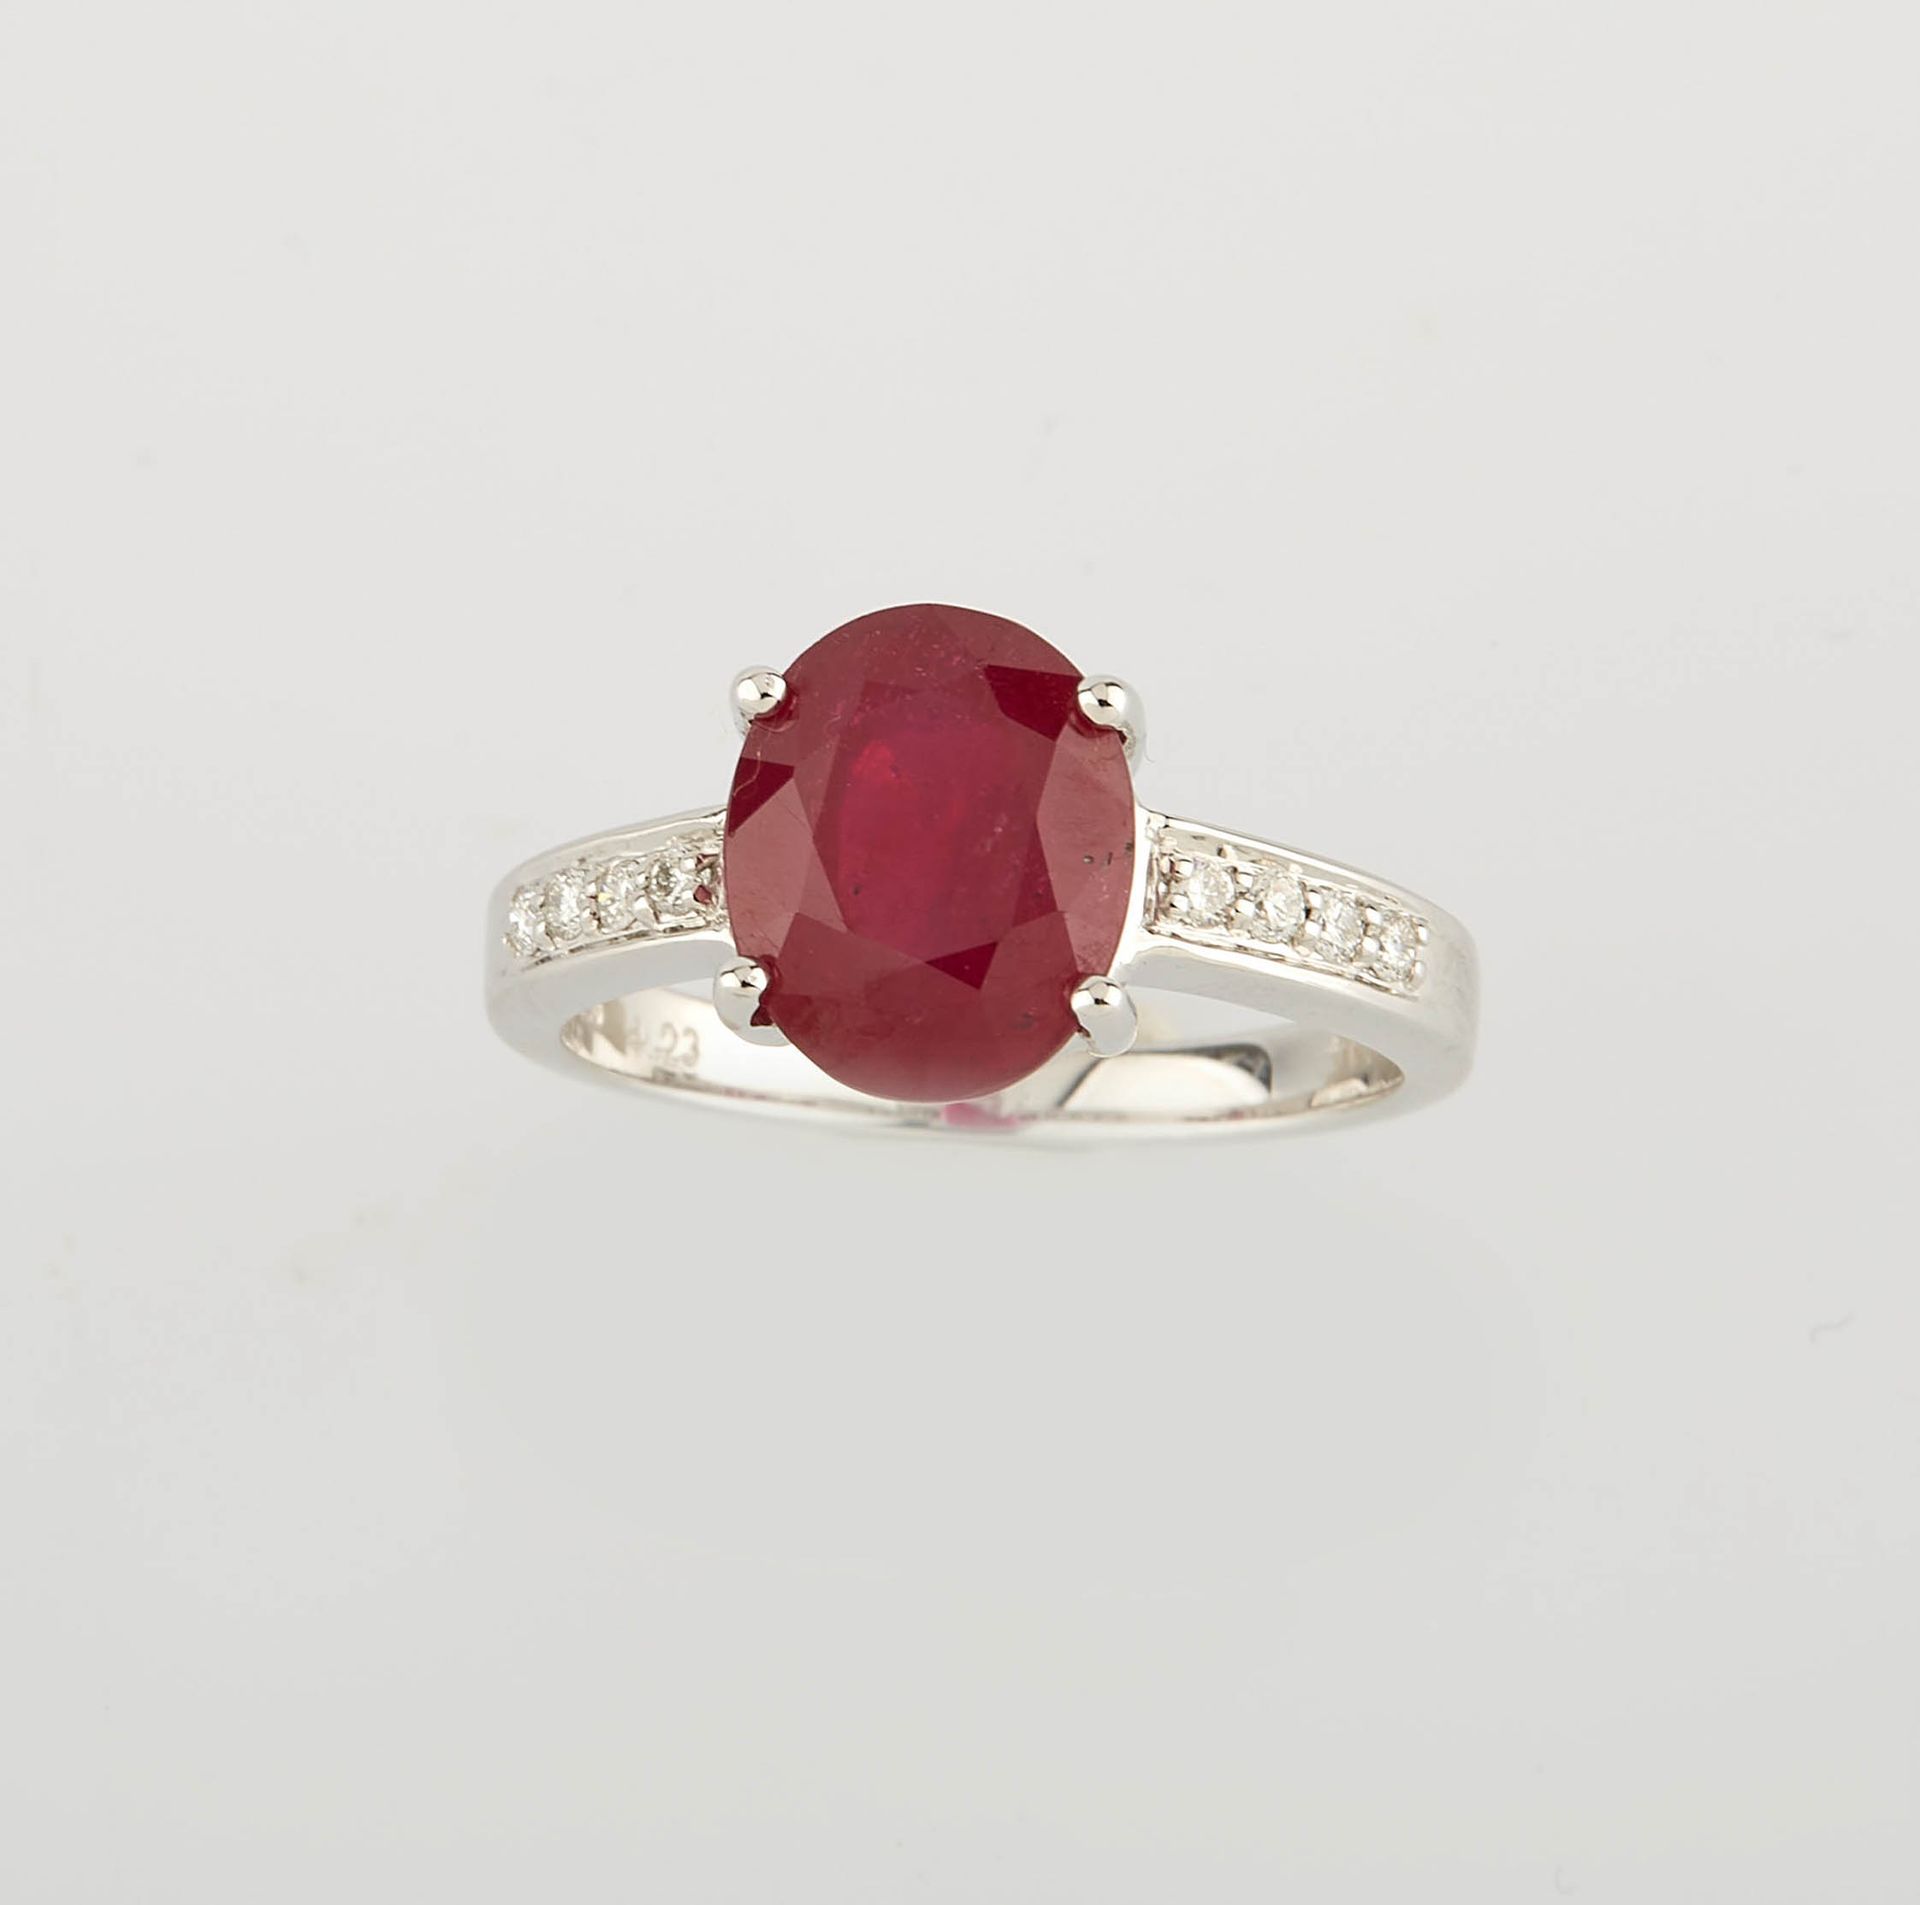 Null 白金戒指上镶嵌着一颗经过处理的椭圆红宝石，重约4.20克拉，以及八颗现代圆钻，重约0.10克拉。